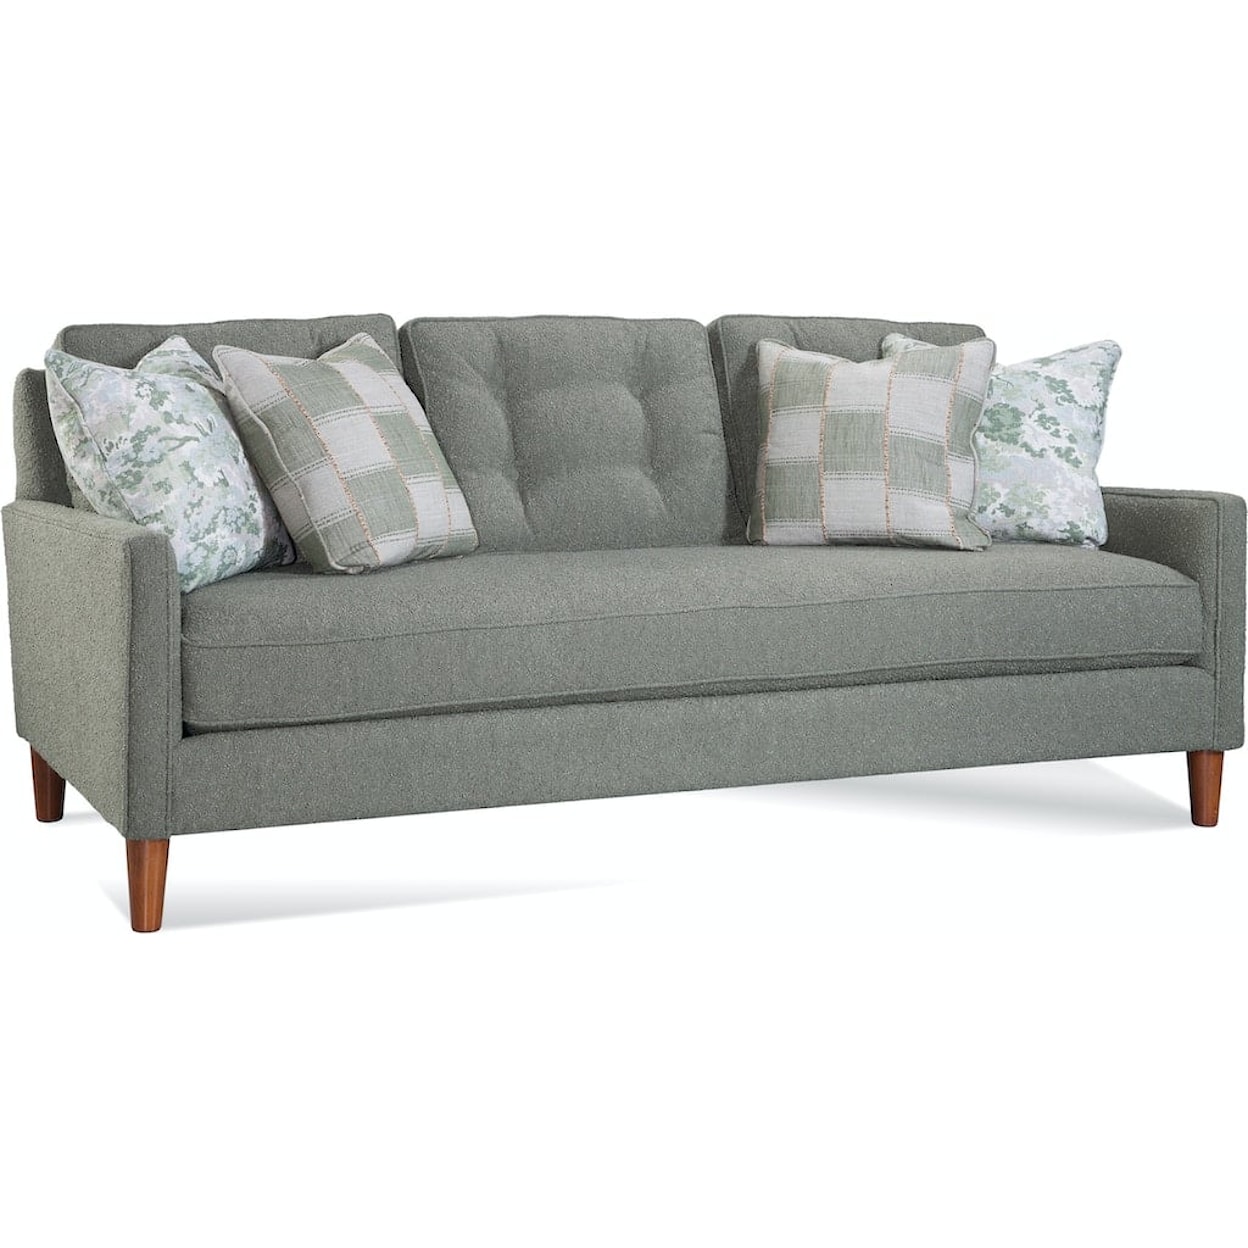 Braxton Culler Urban Options Urban Options Bench Cushion Sofa